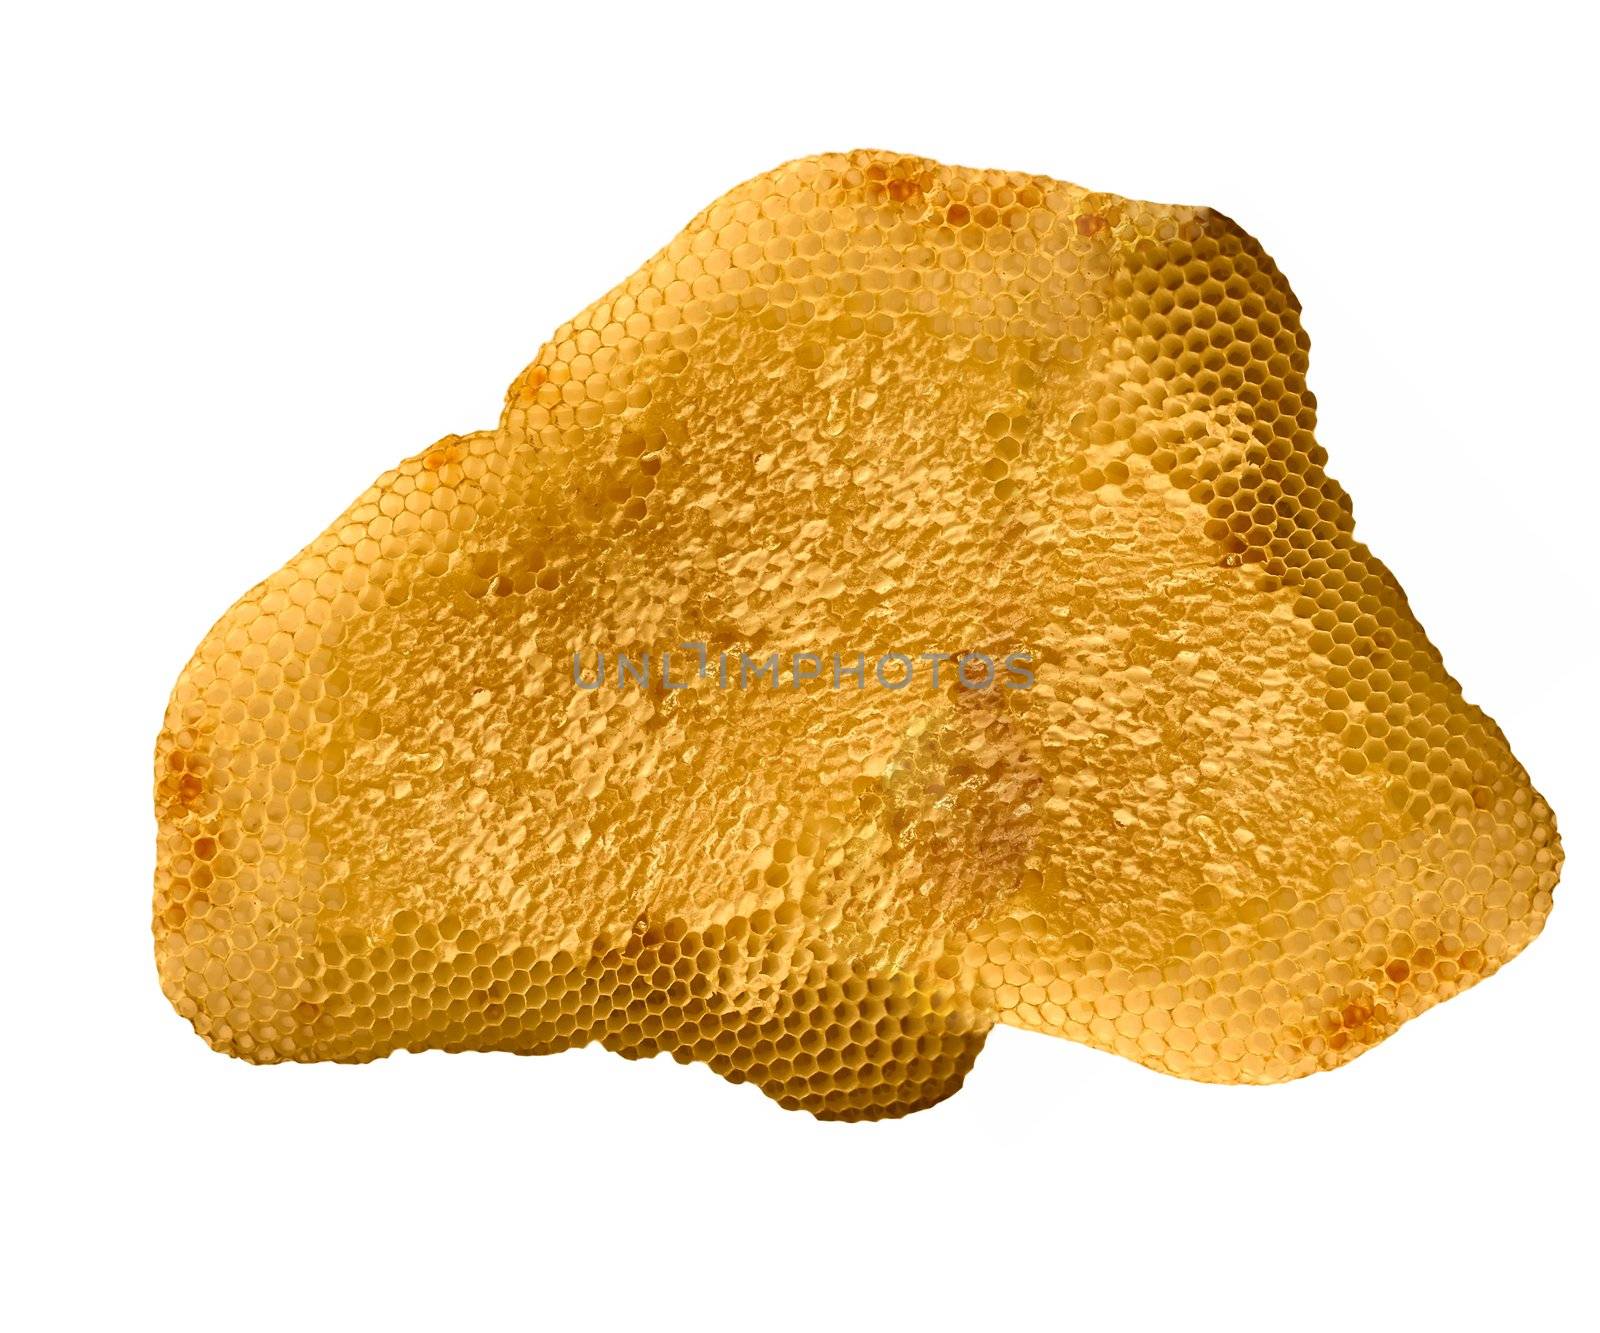 Honeycomb close up by ozaiachin